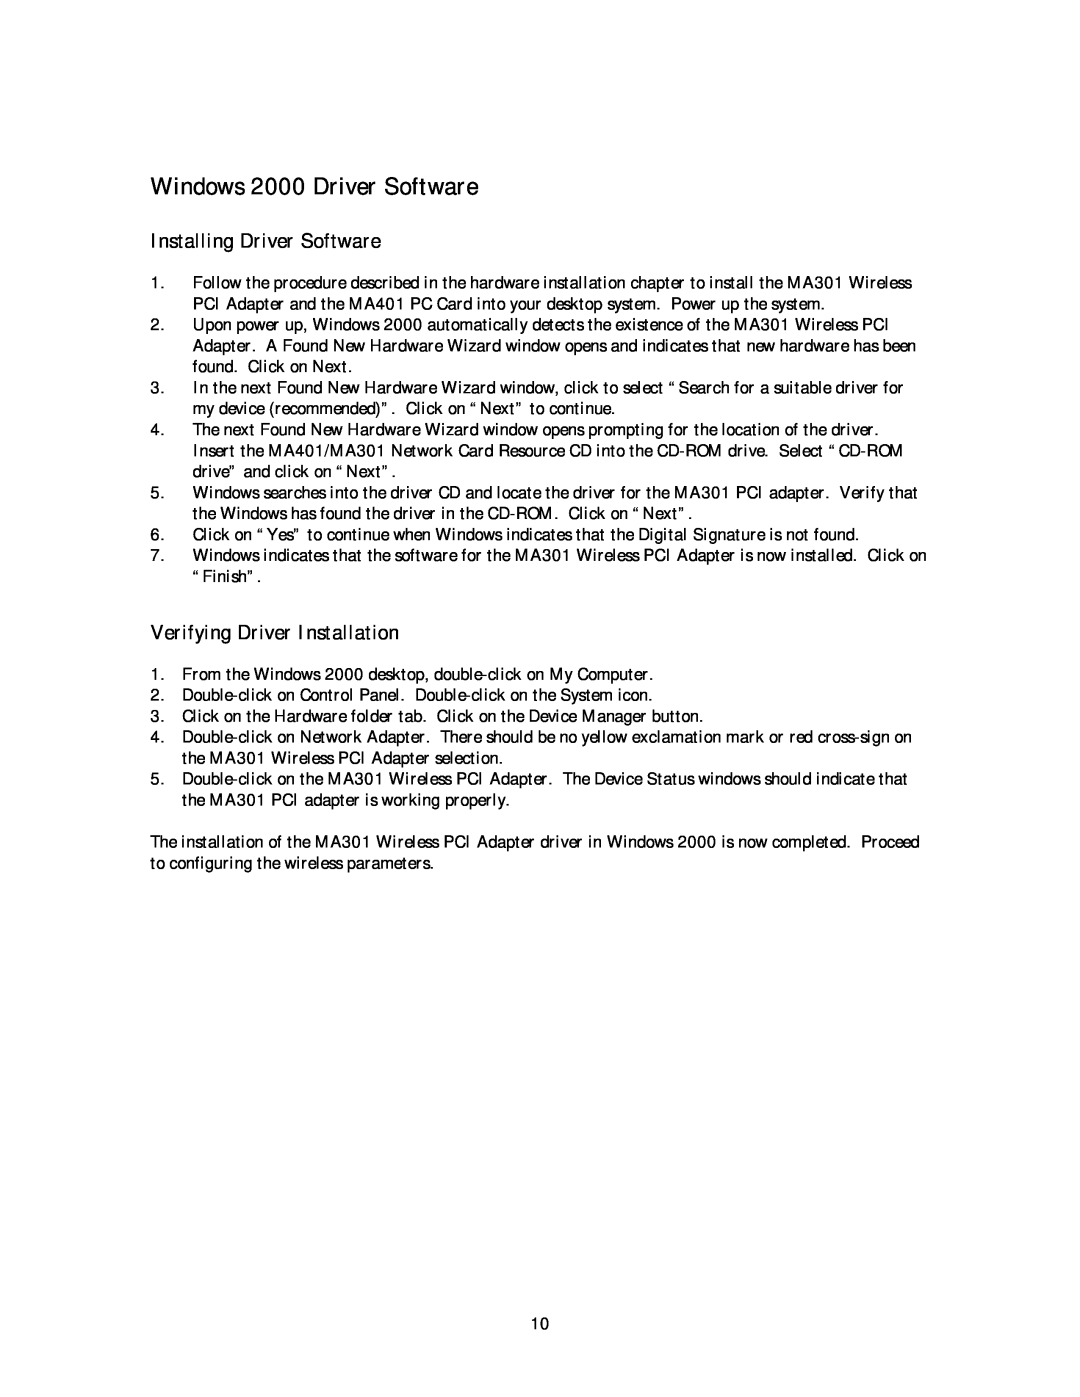 NETGEAR MA 301 manual Windows 2000 Driver Software, Installing Driver Software, Verifying Driver Installation 